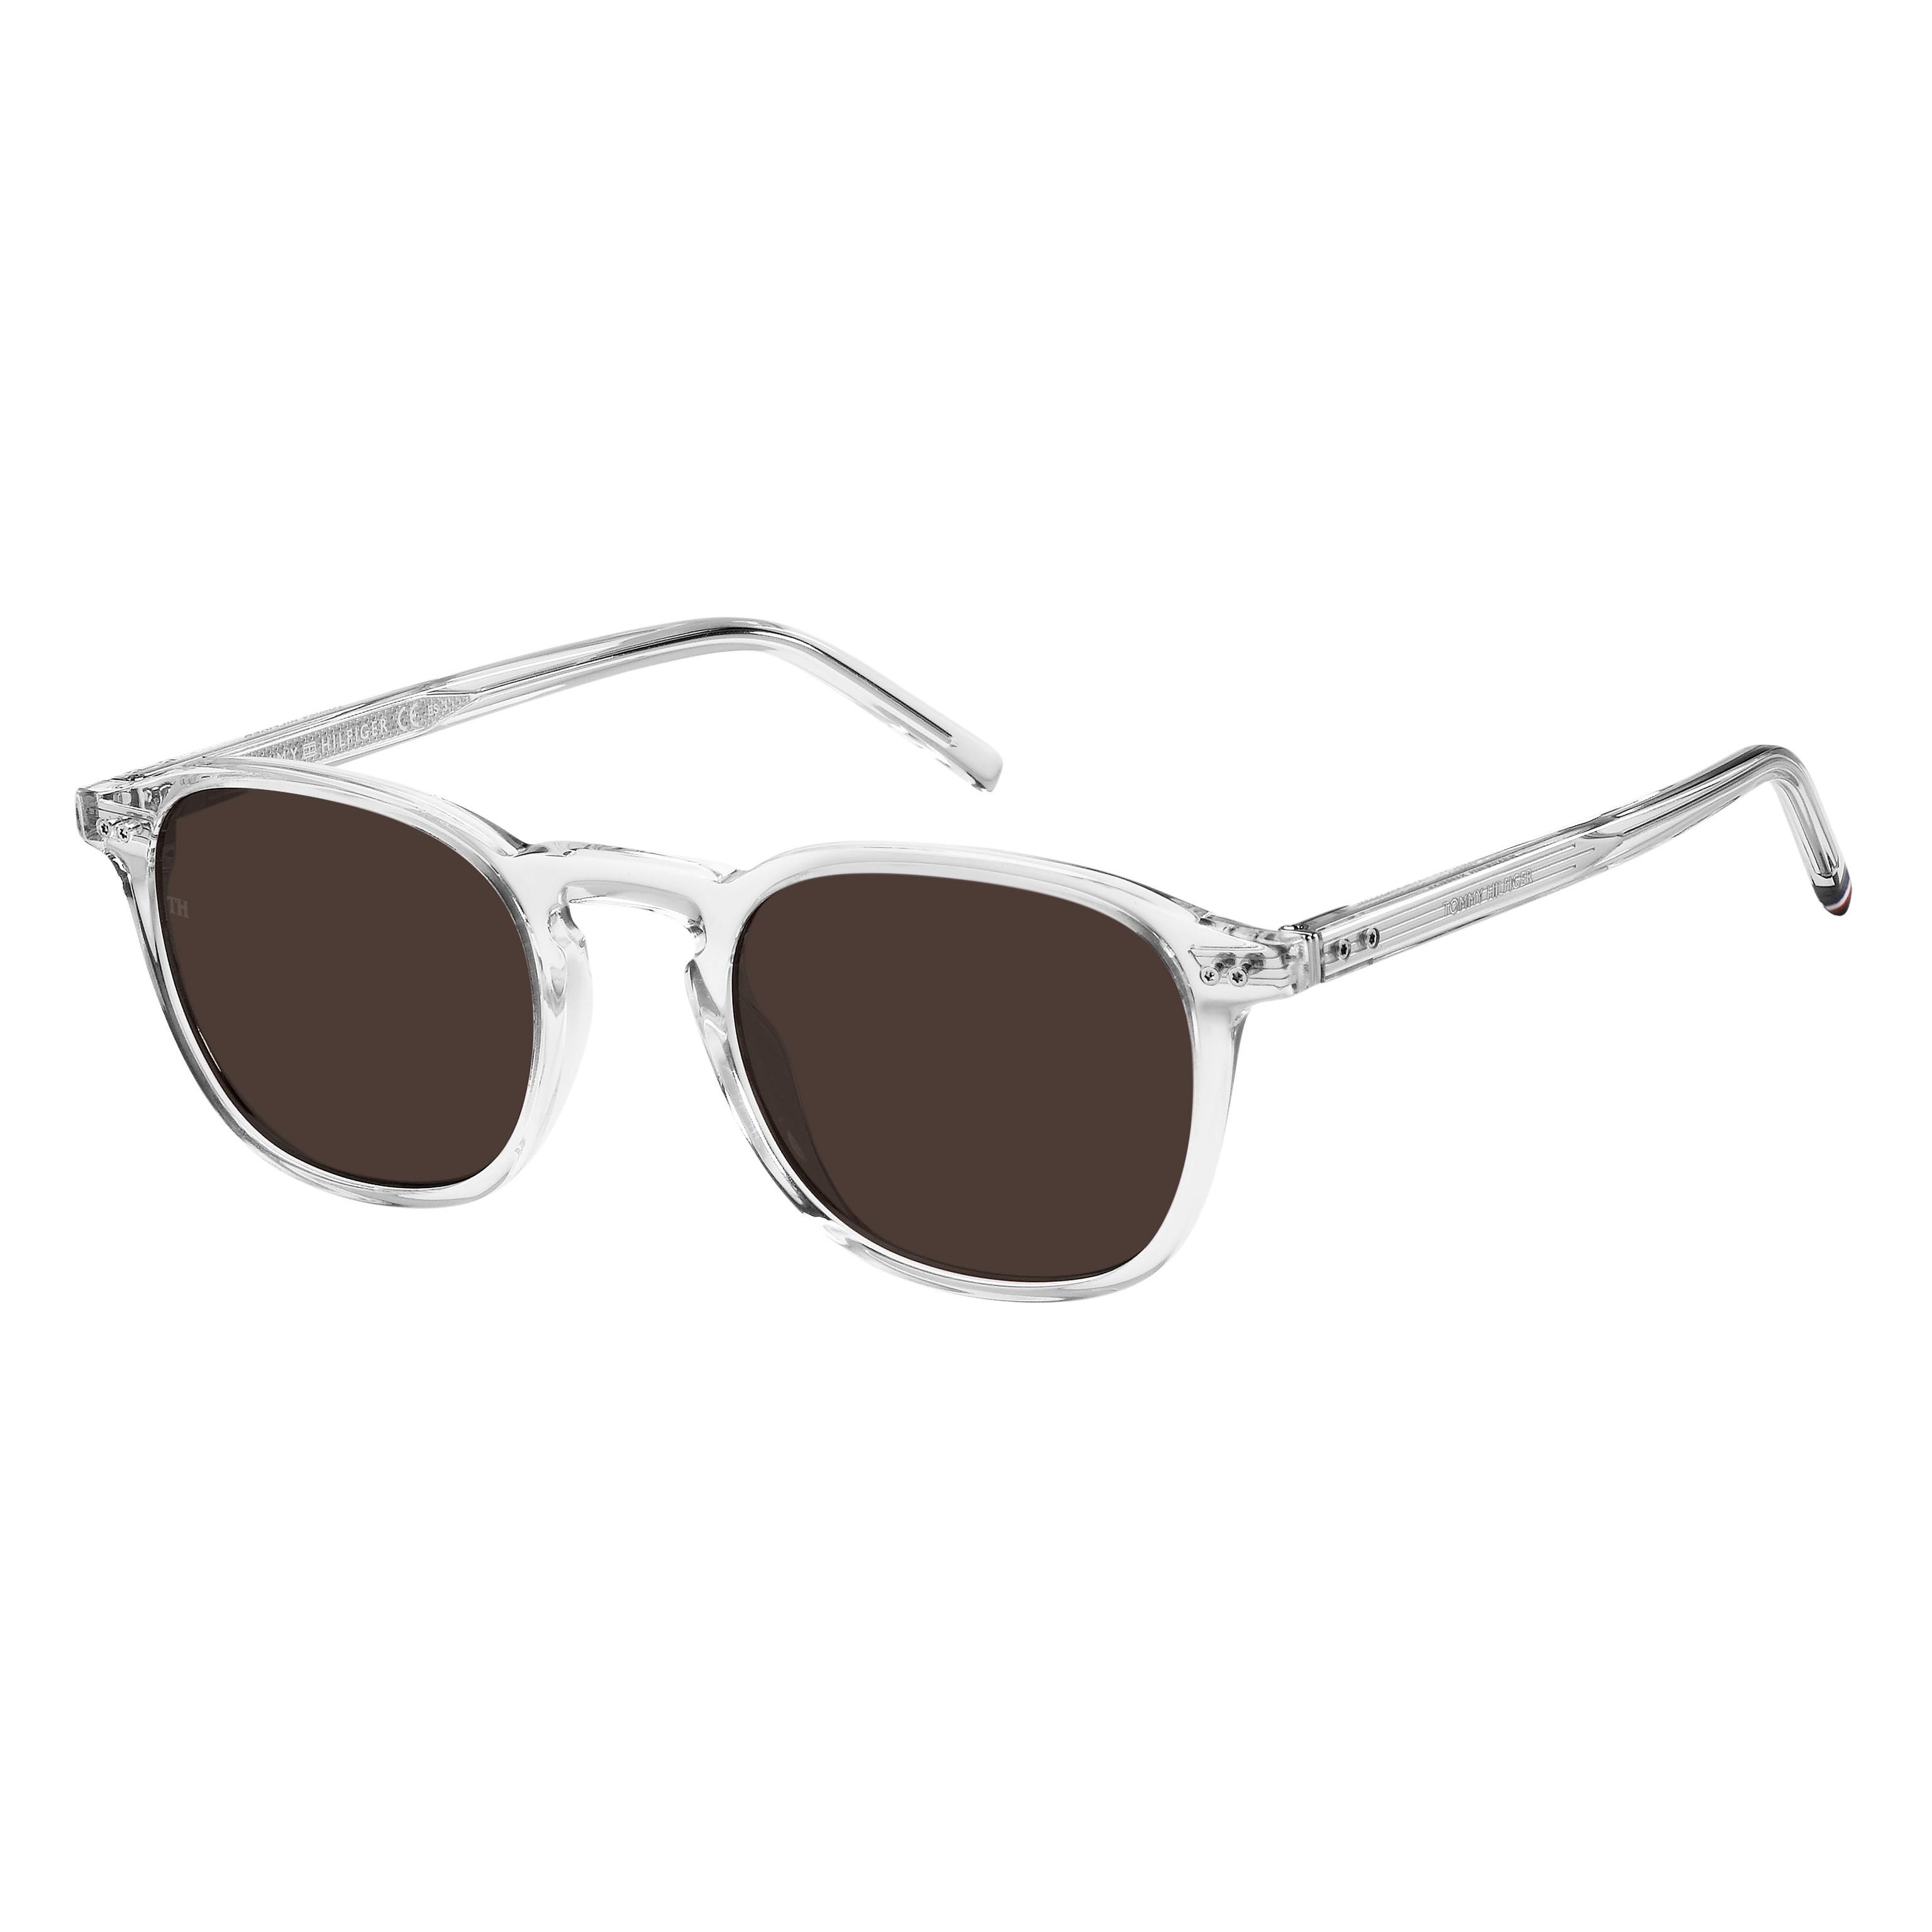 TH 1939 S Panthos Sunglasses 900 - size 51